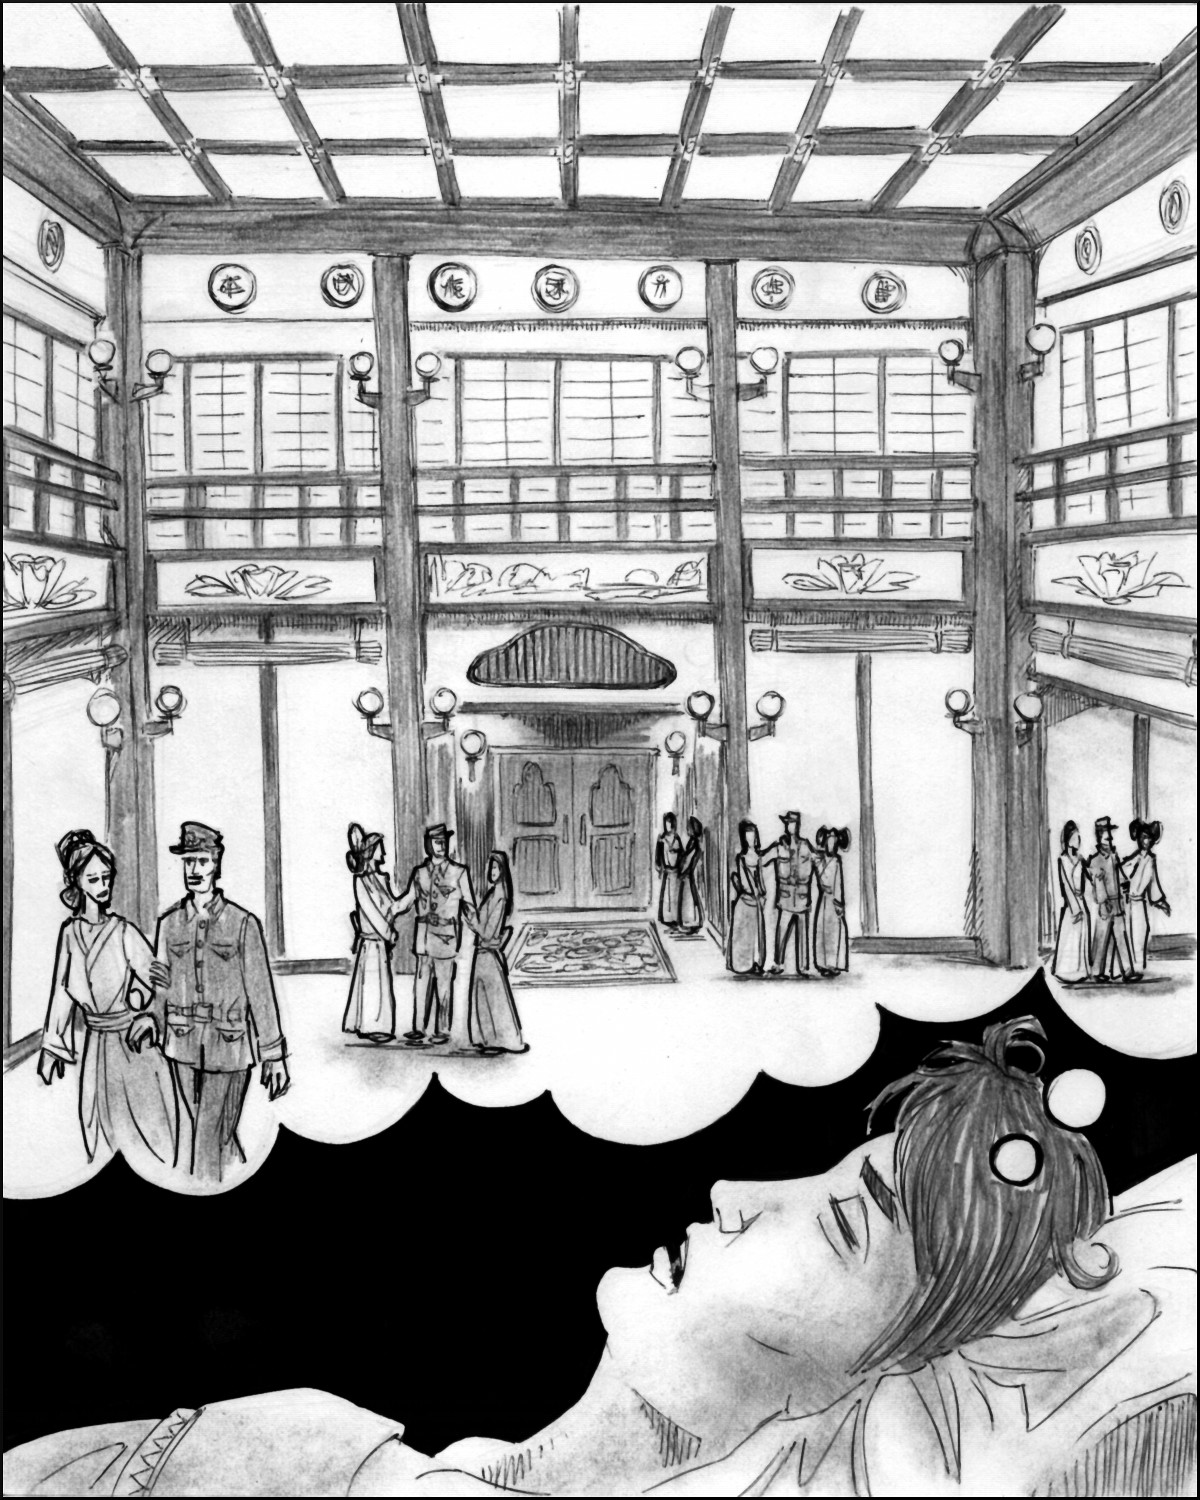 Buck Yale dreams of a Japanese bathhouse.